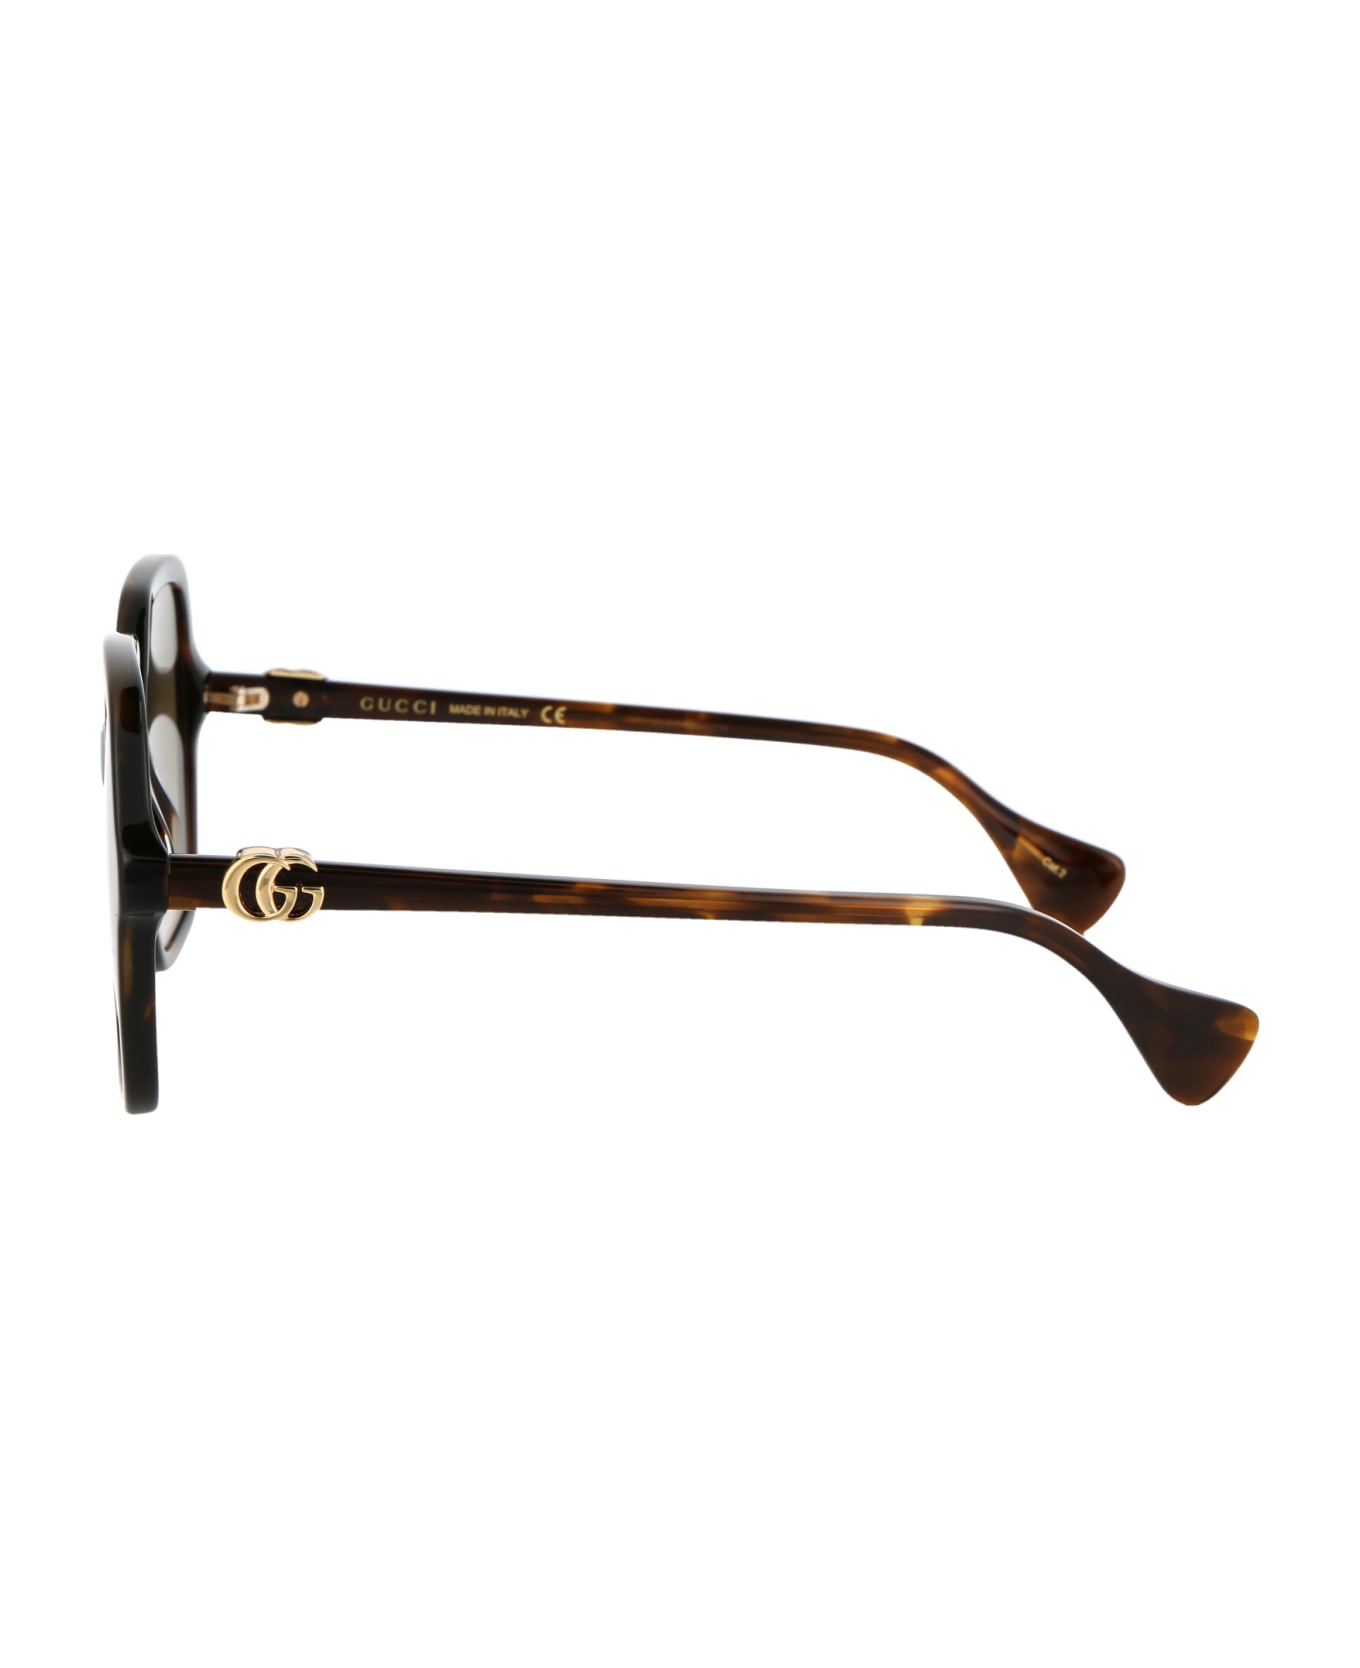 Gucci Eyewear Gg1072s Sunglasses - 002 HAVANA HAVANA BROWN